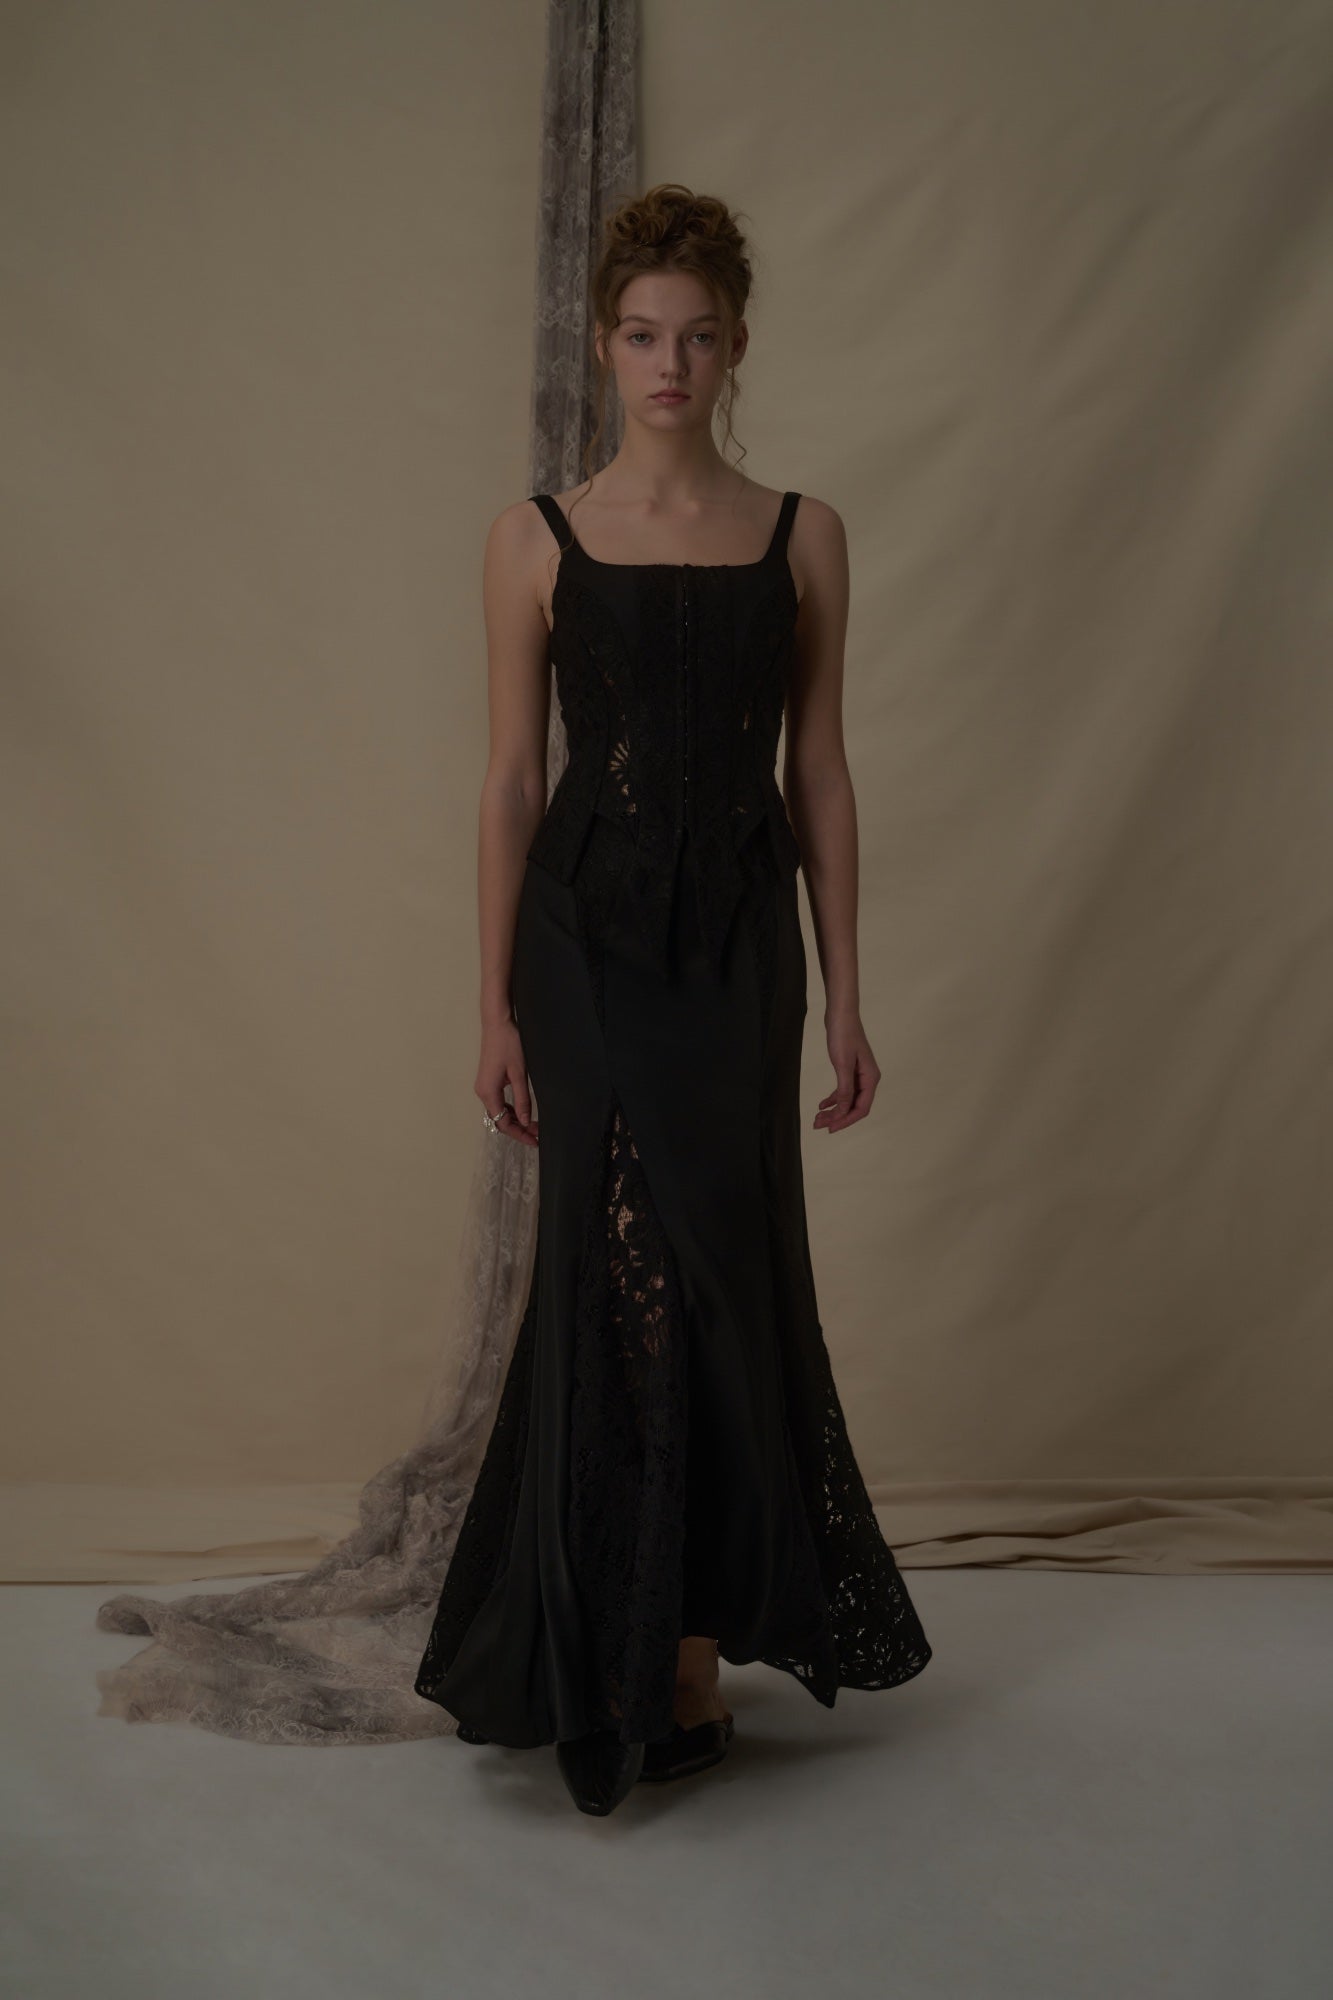 ELYWOOD Black Lace Split Mid-Length Skirt | MADA IN CHINA